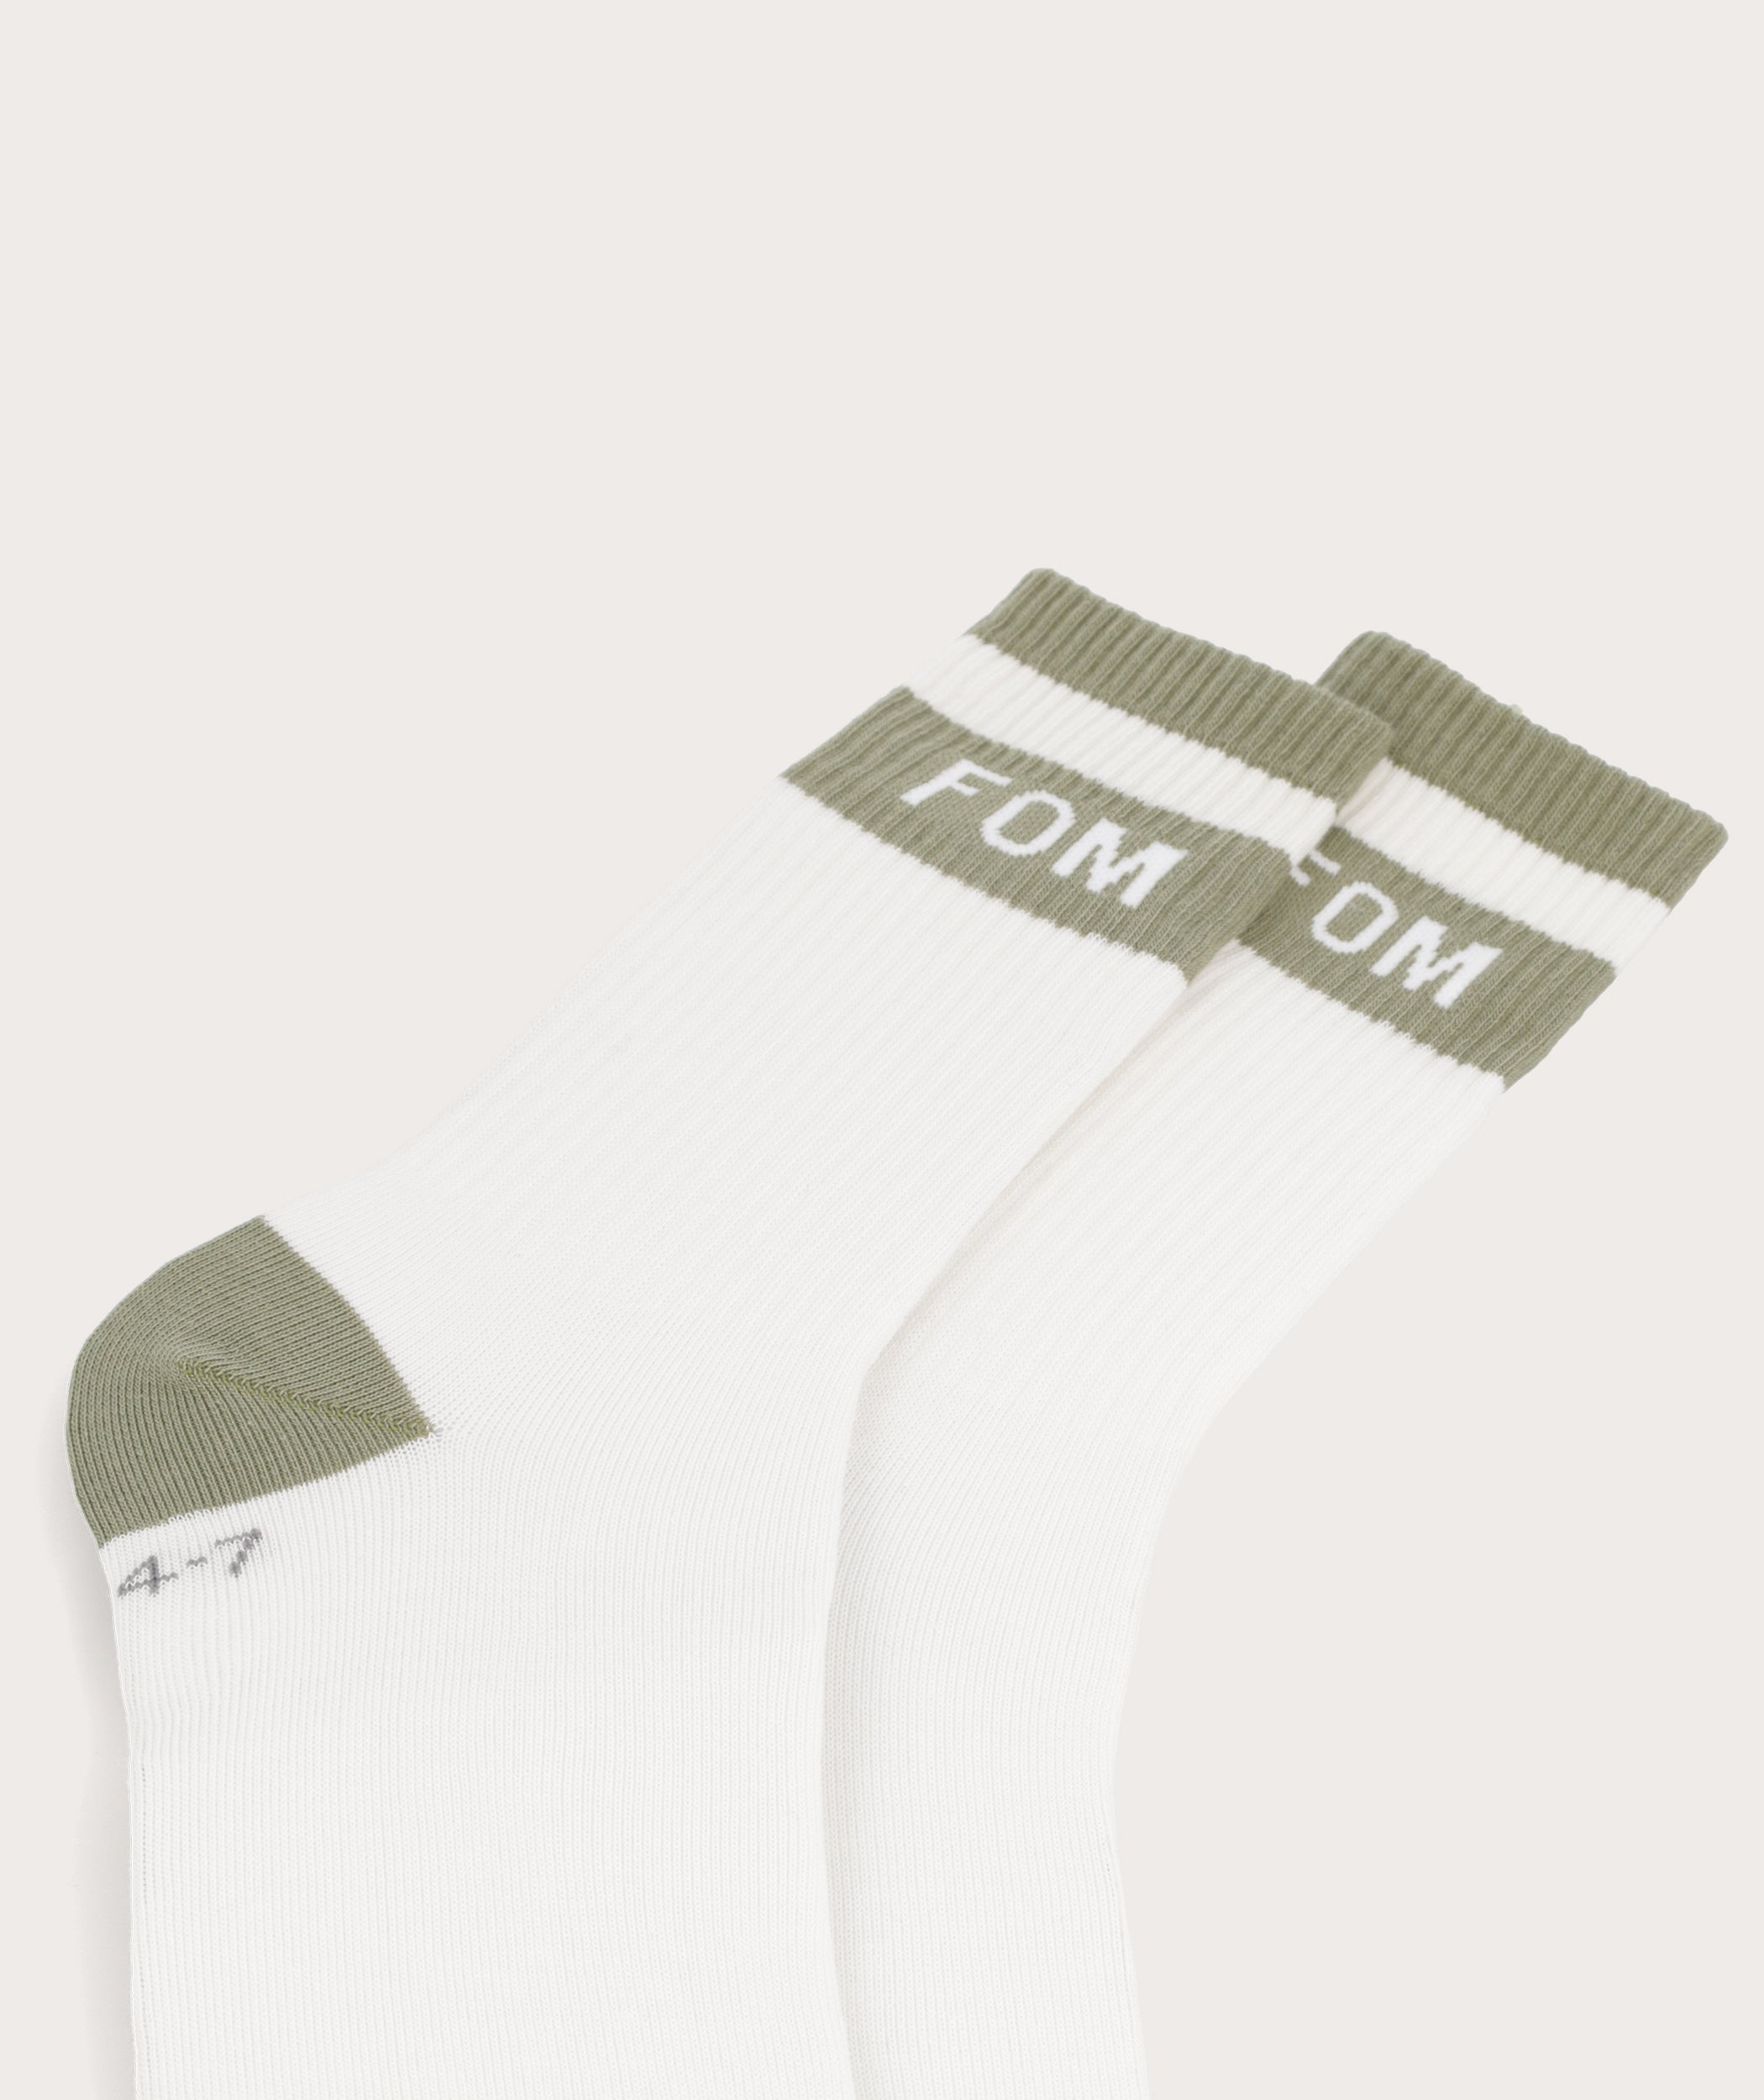 Socks FOM Crew - Cream & Olive (Size 4-7)